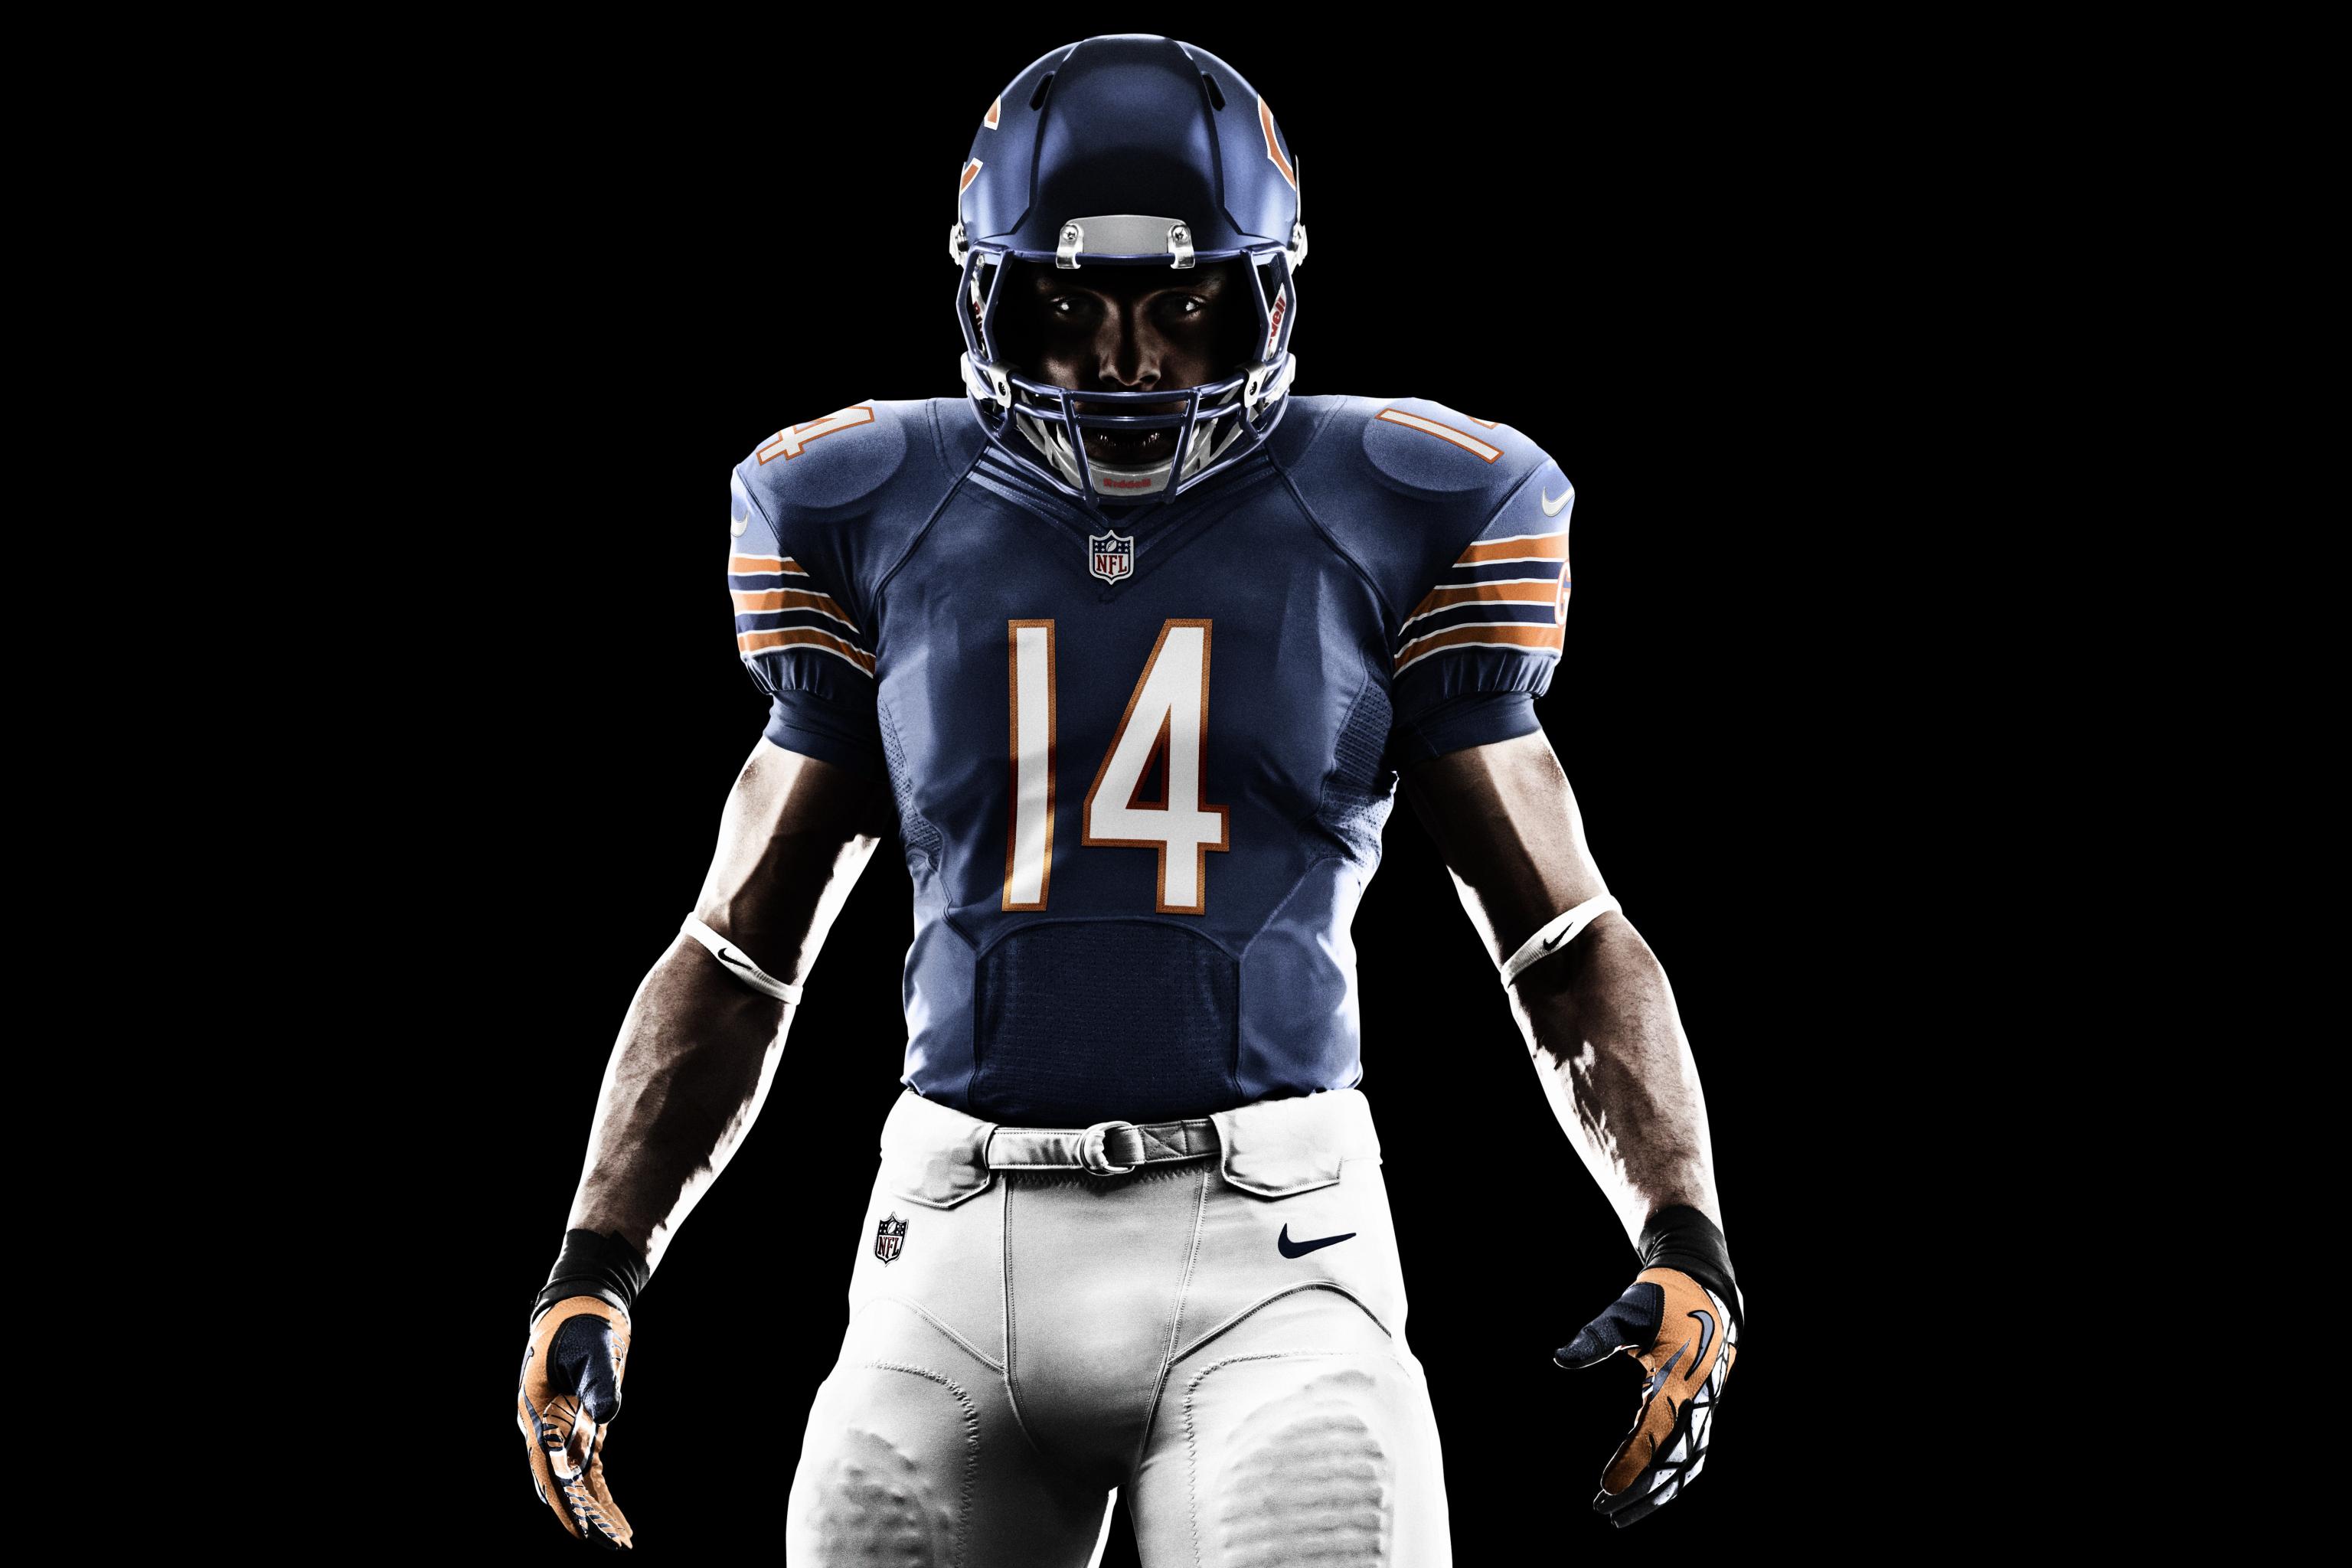 Bears unveil orange Nike jerseys